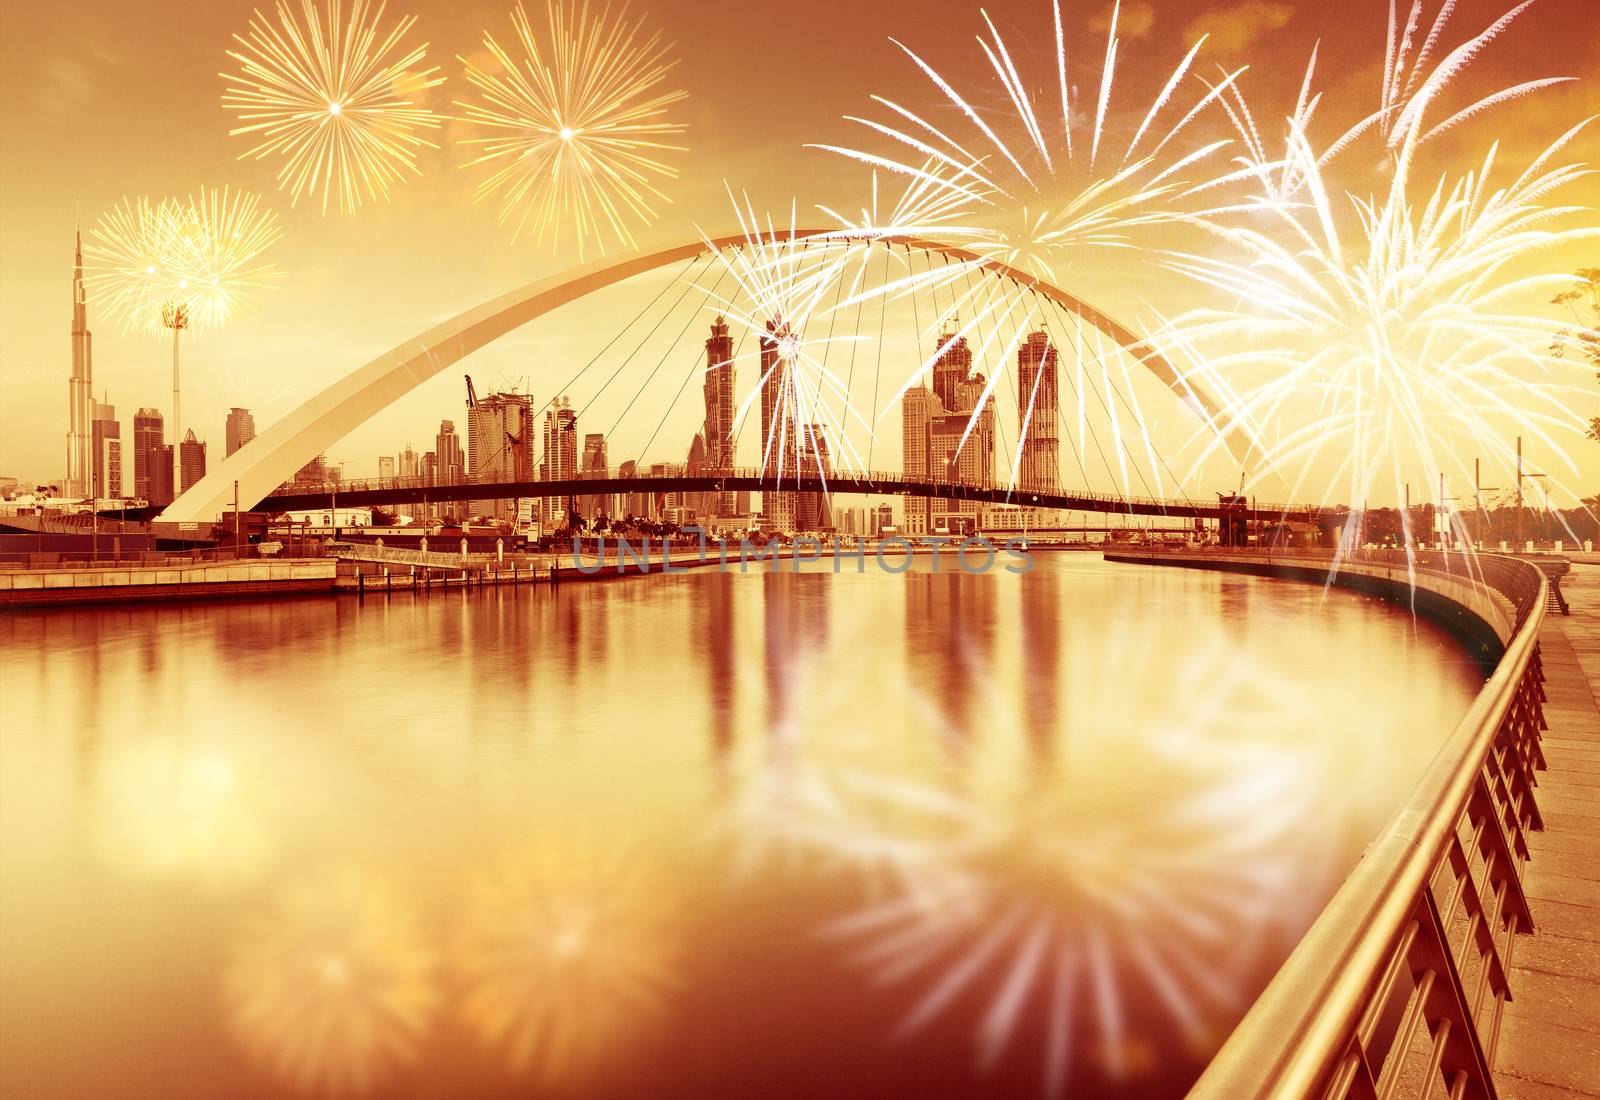 fireworks around Tolerance bridge - exotic New Year destination, by melis